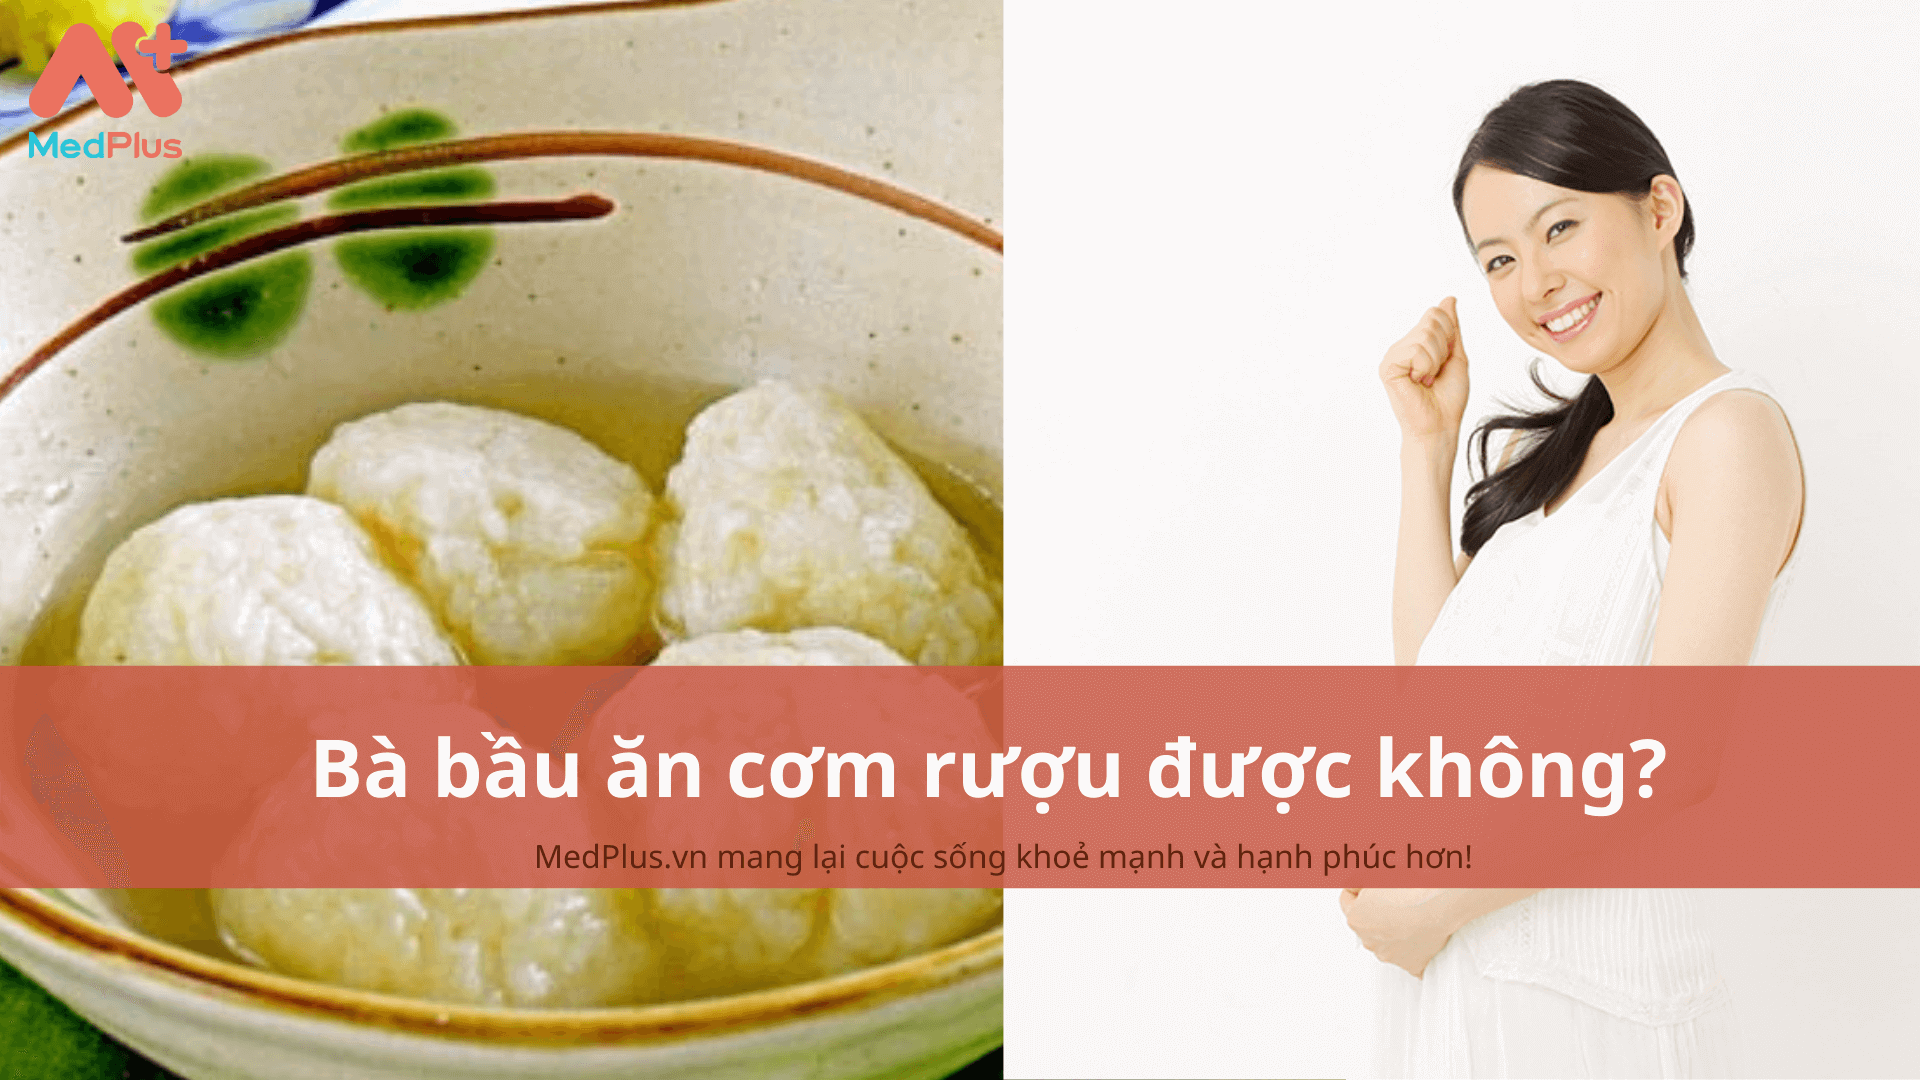 ba bau an com ruou duoc khong - Medplus